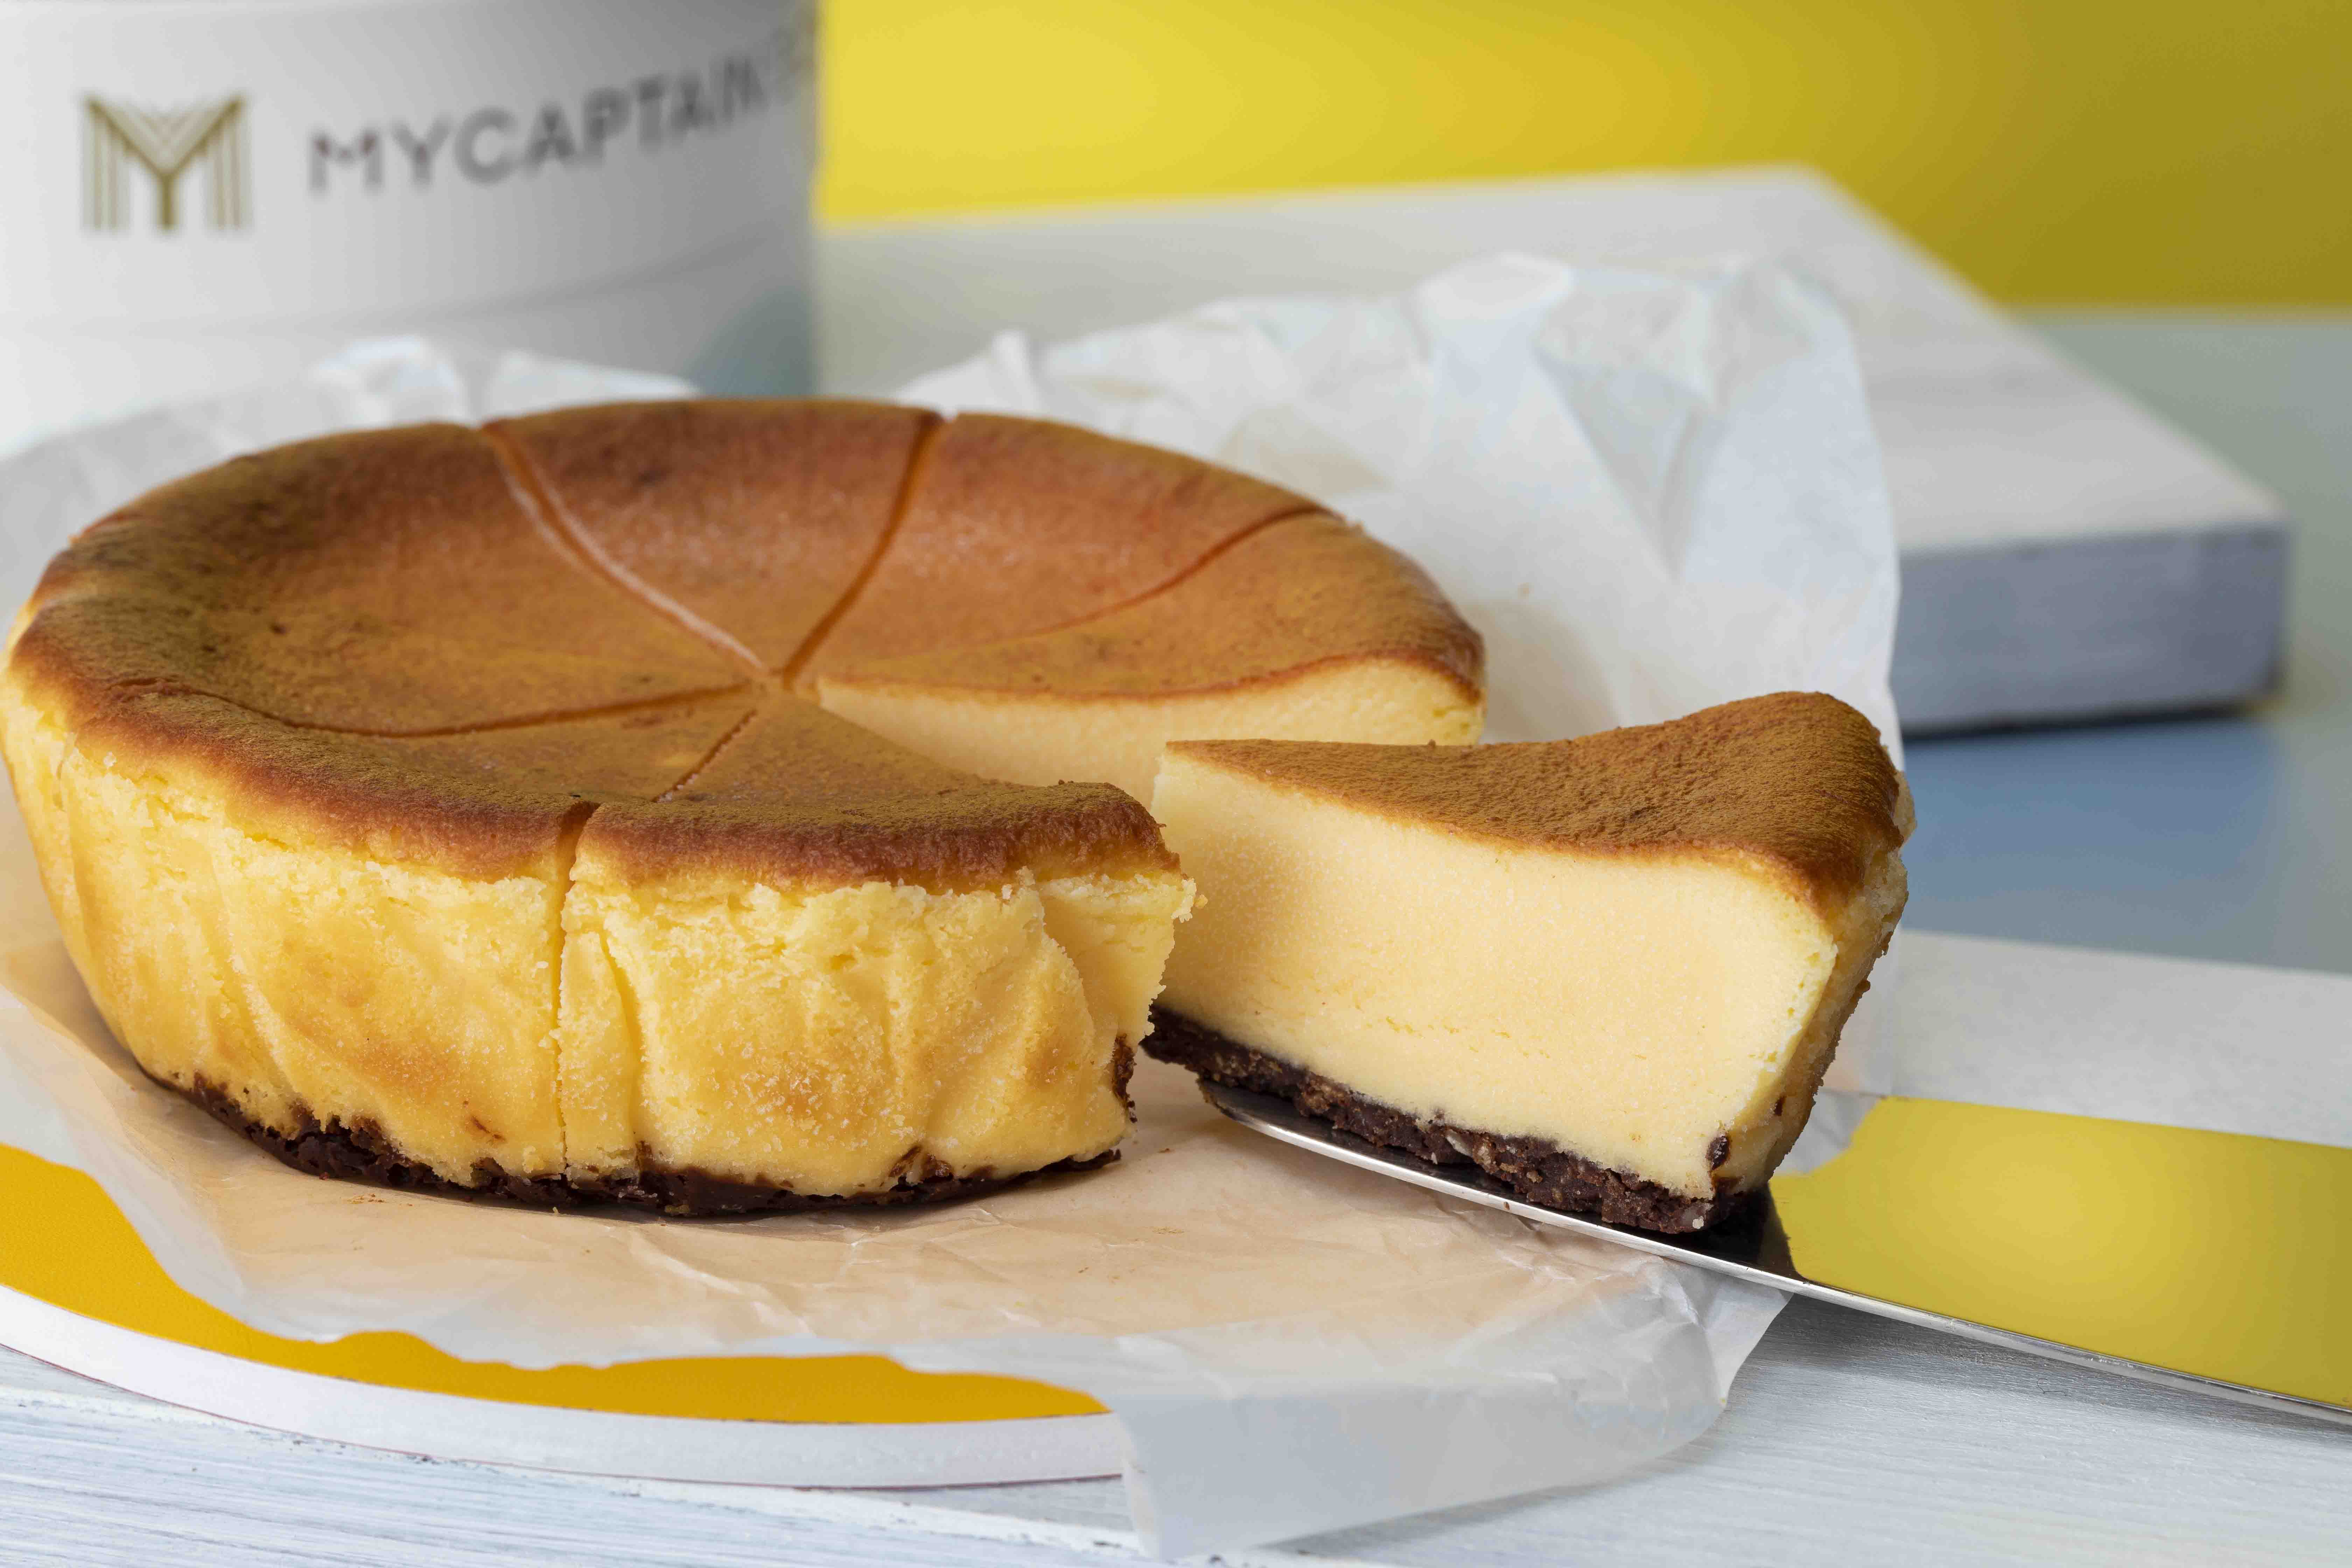 Jr東京駅限定 話題沸騰の 冷凍のままで美味しいチーズケーキ が待望の復活 株式会社グレープストーンのプレスリリース